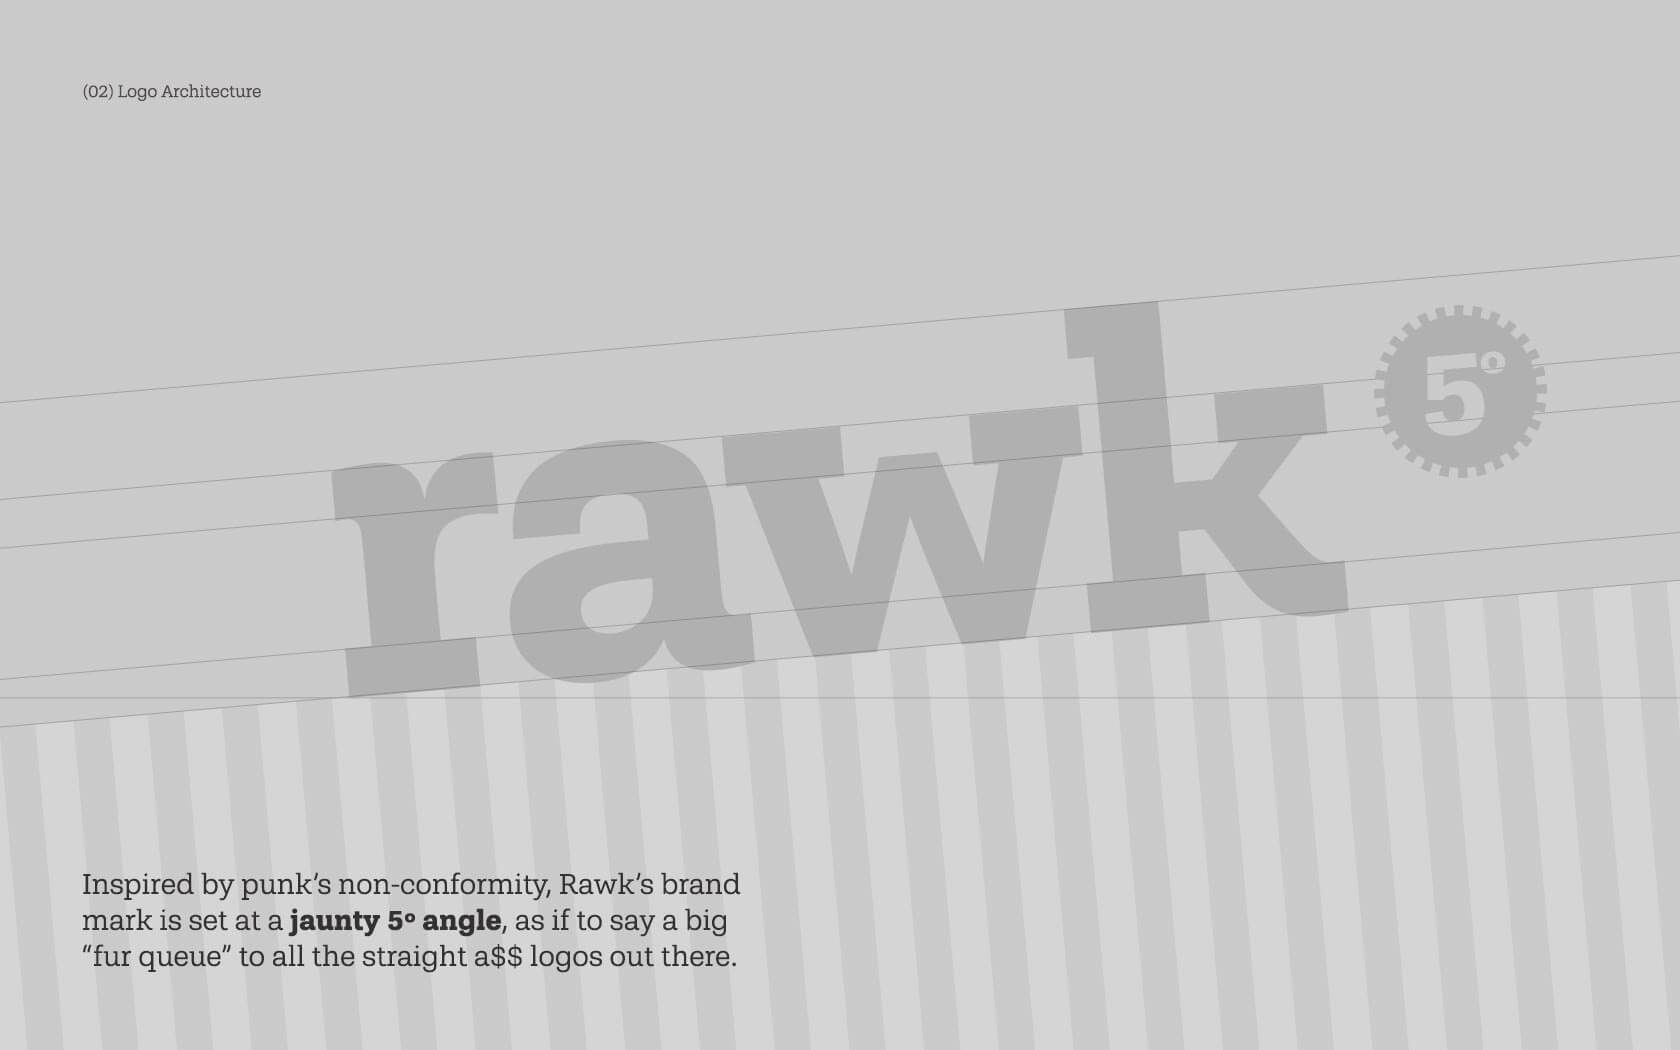 Rawk logo architectural grid